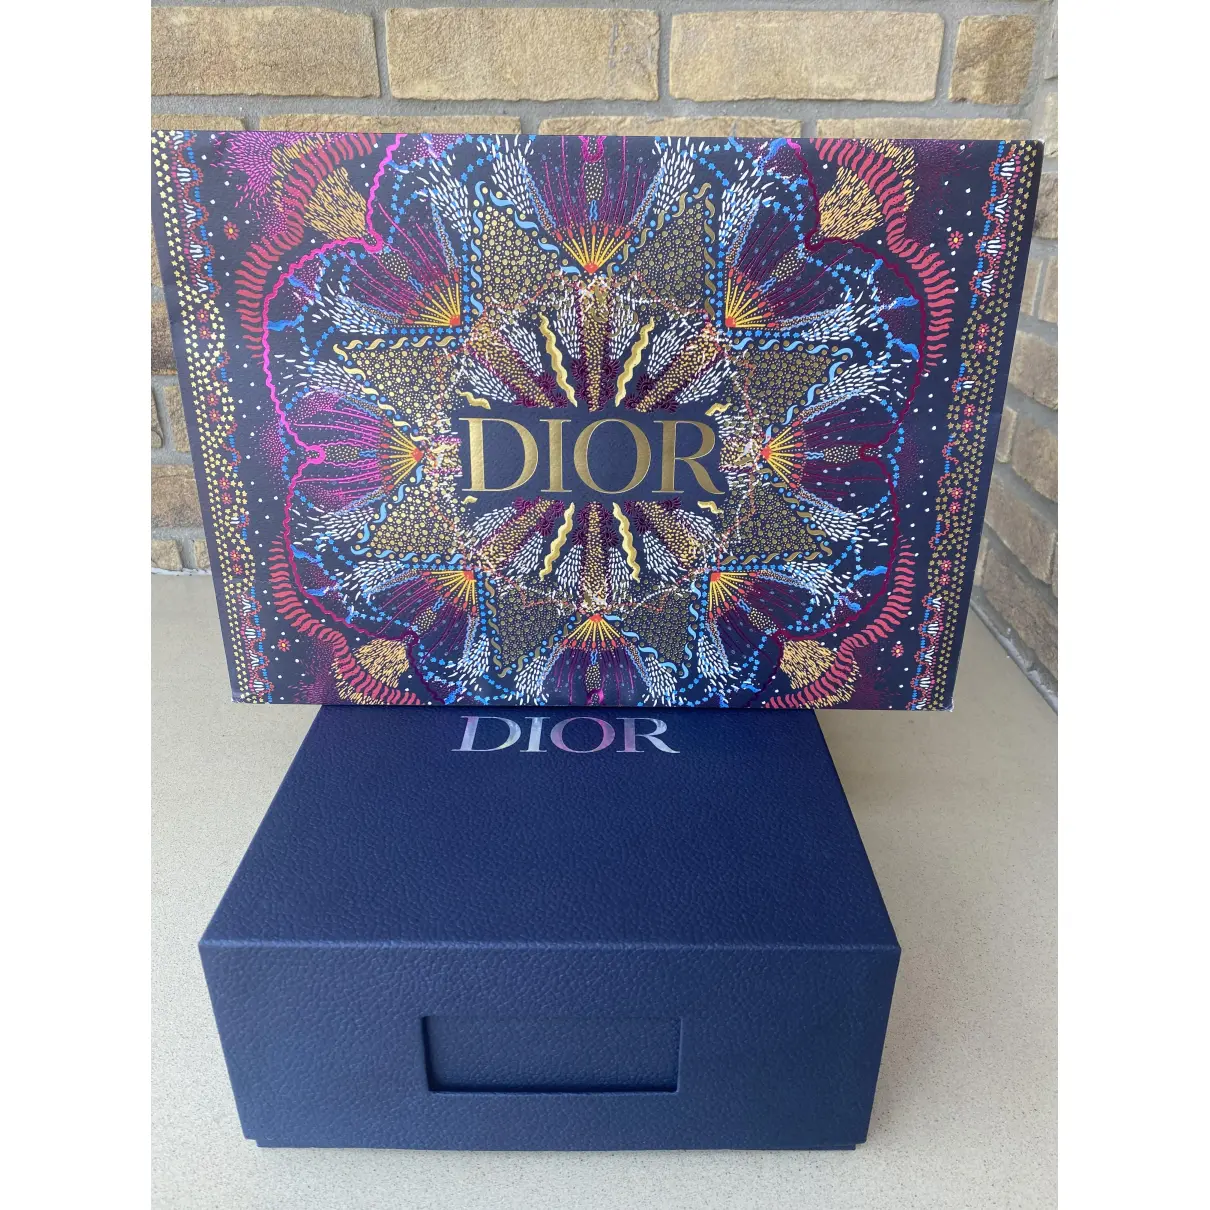 Buy Dior Home decor online